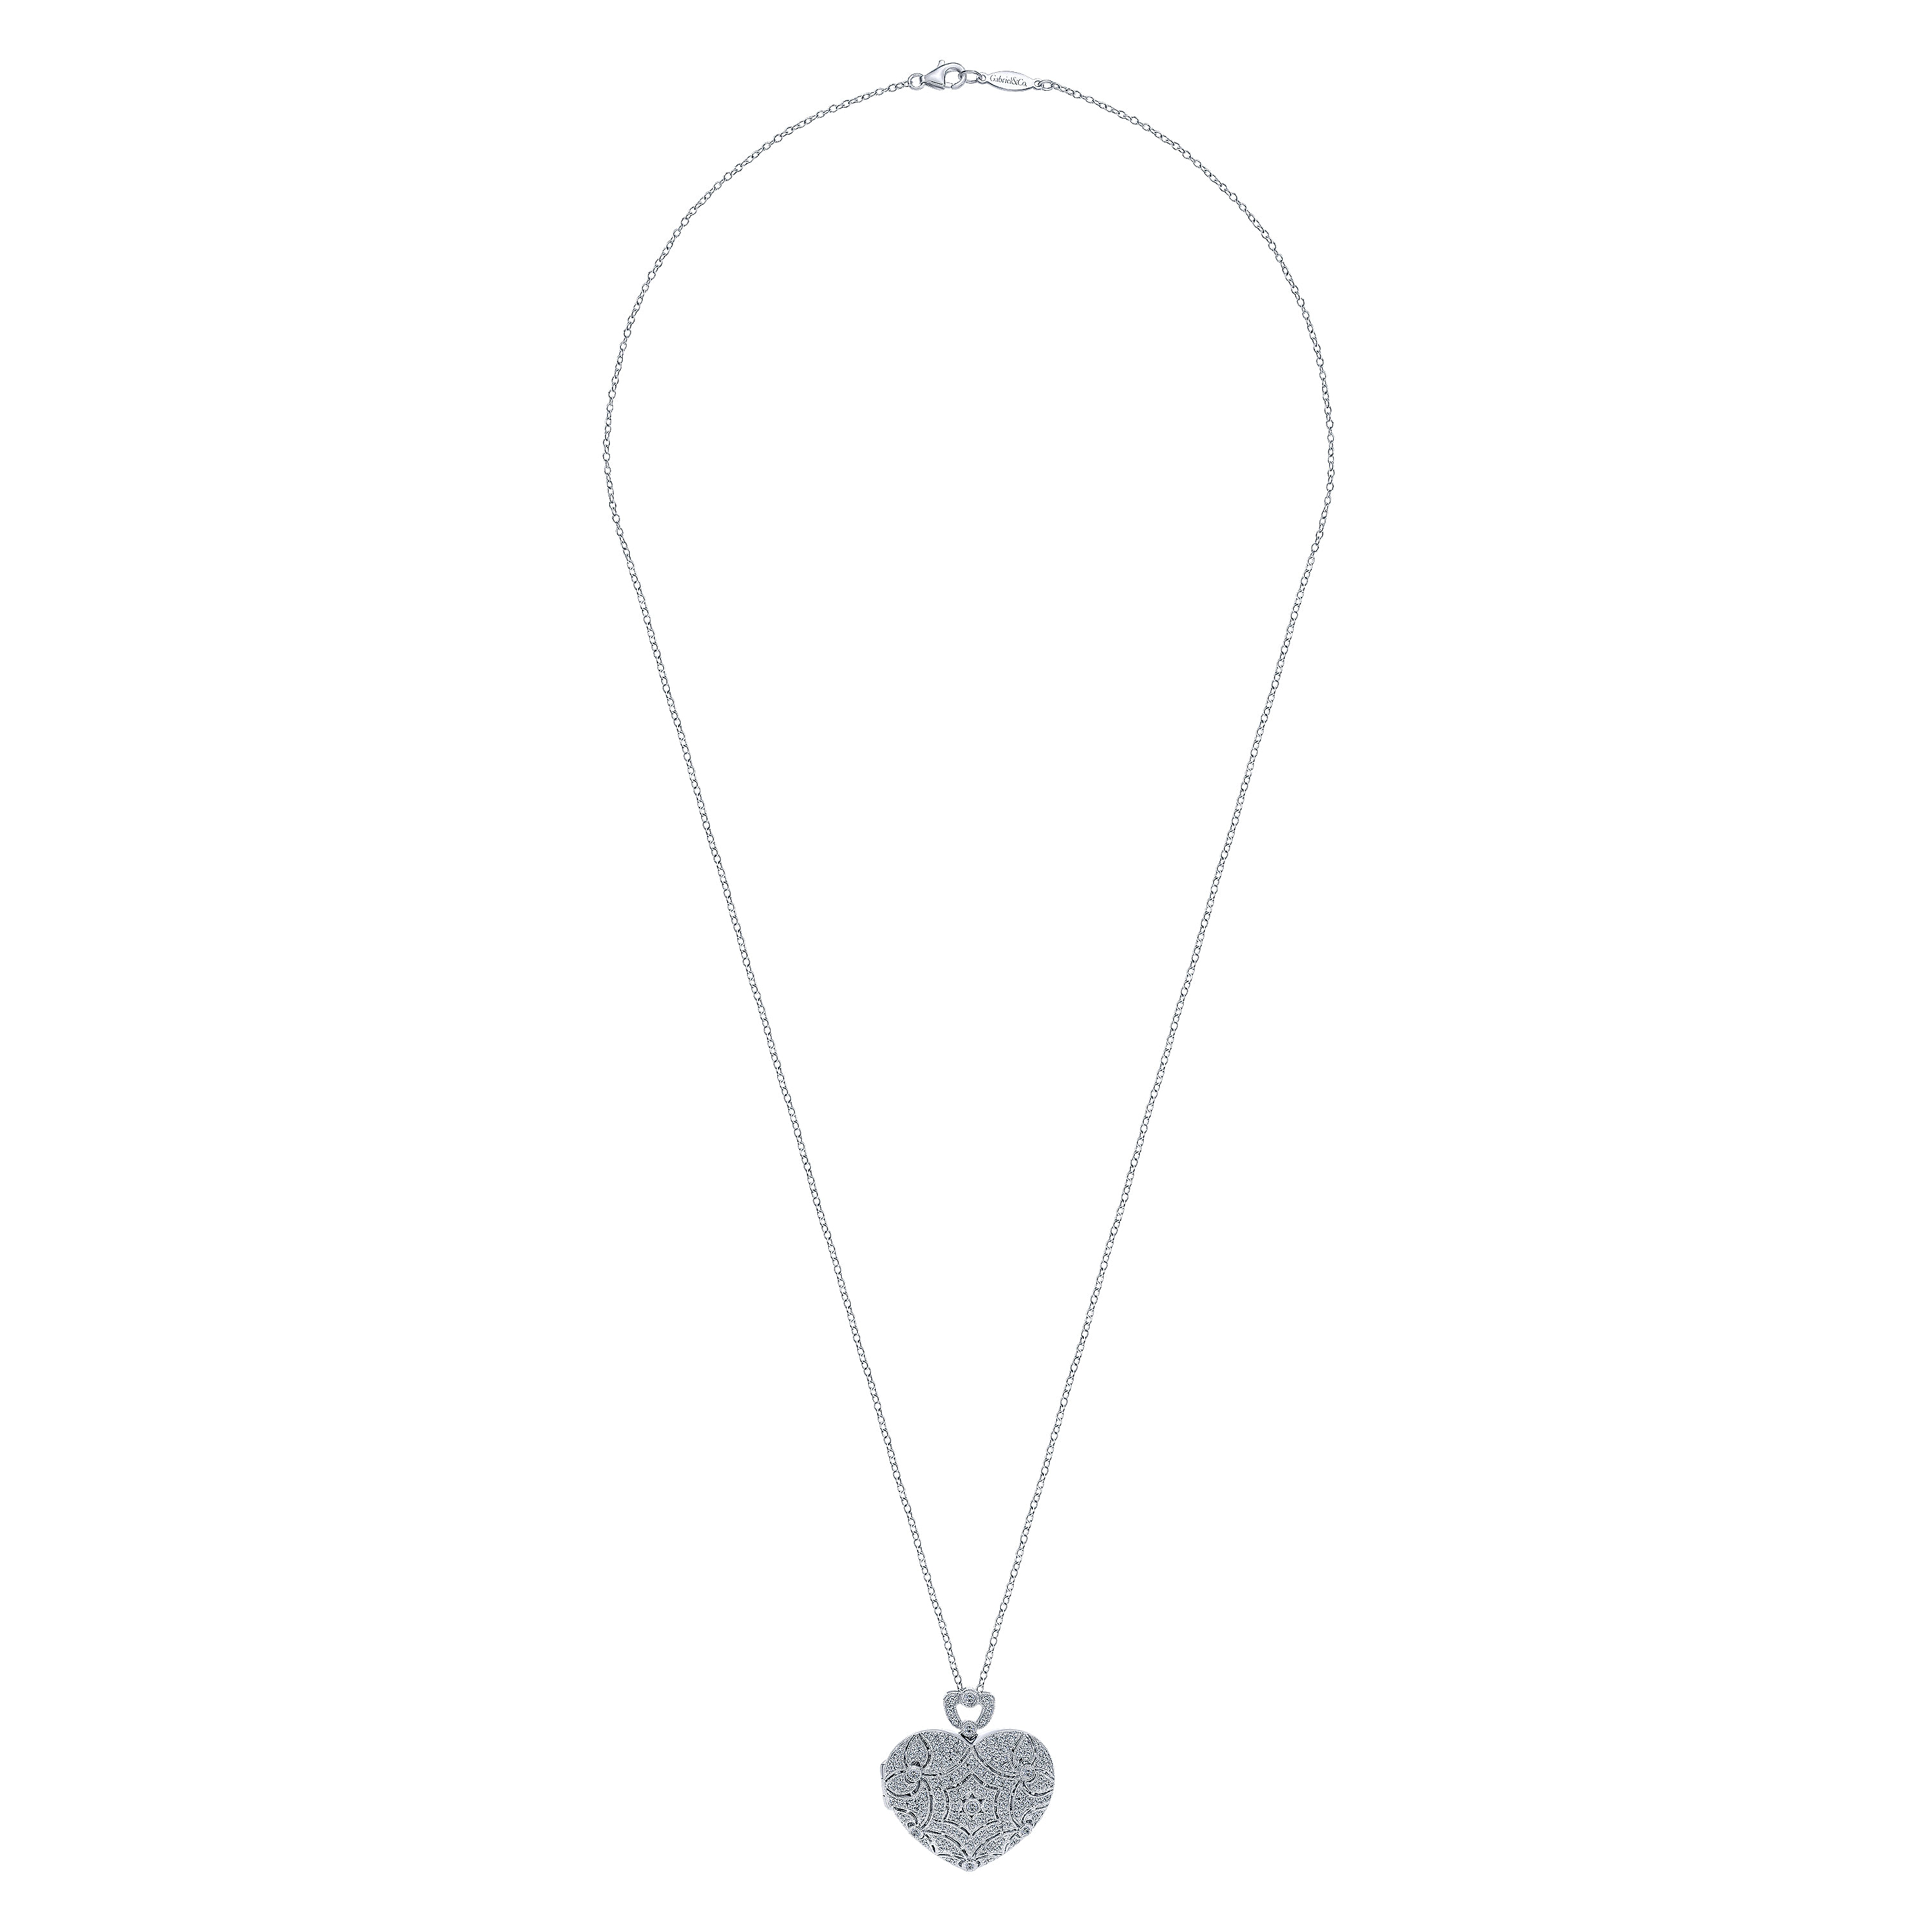 24 inch Vintage Inspired 14K White Gold Heart Shaped Filigree Diamond Locket Necklace